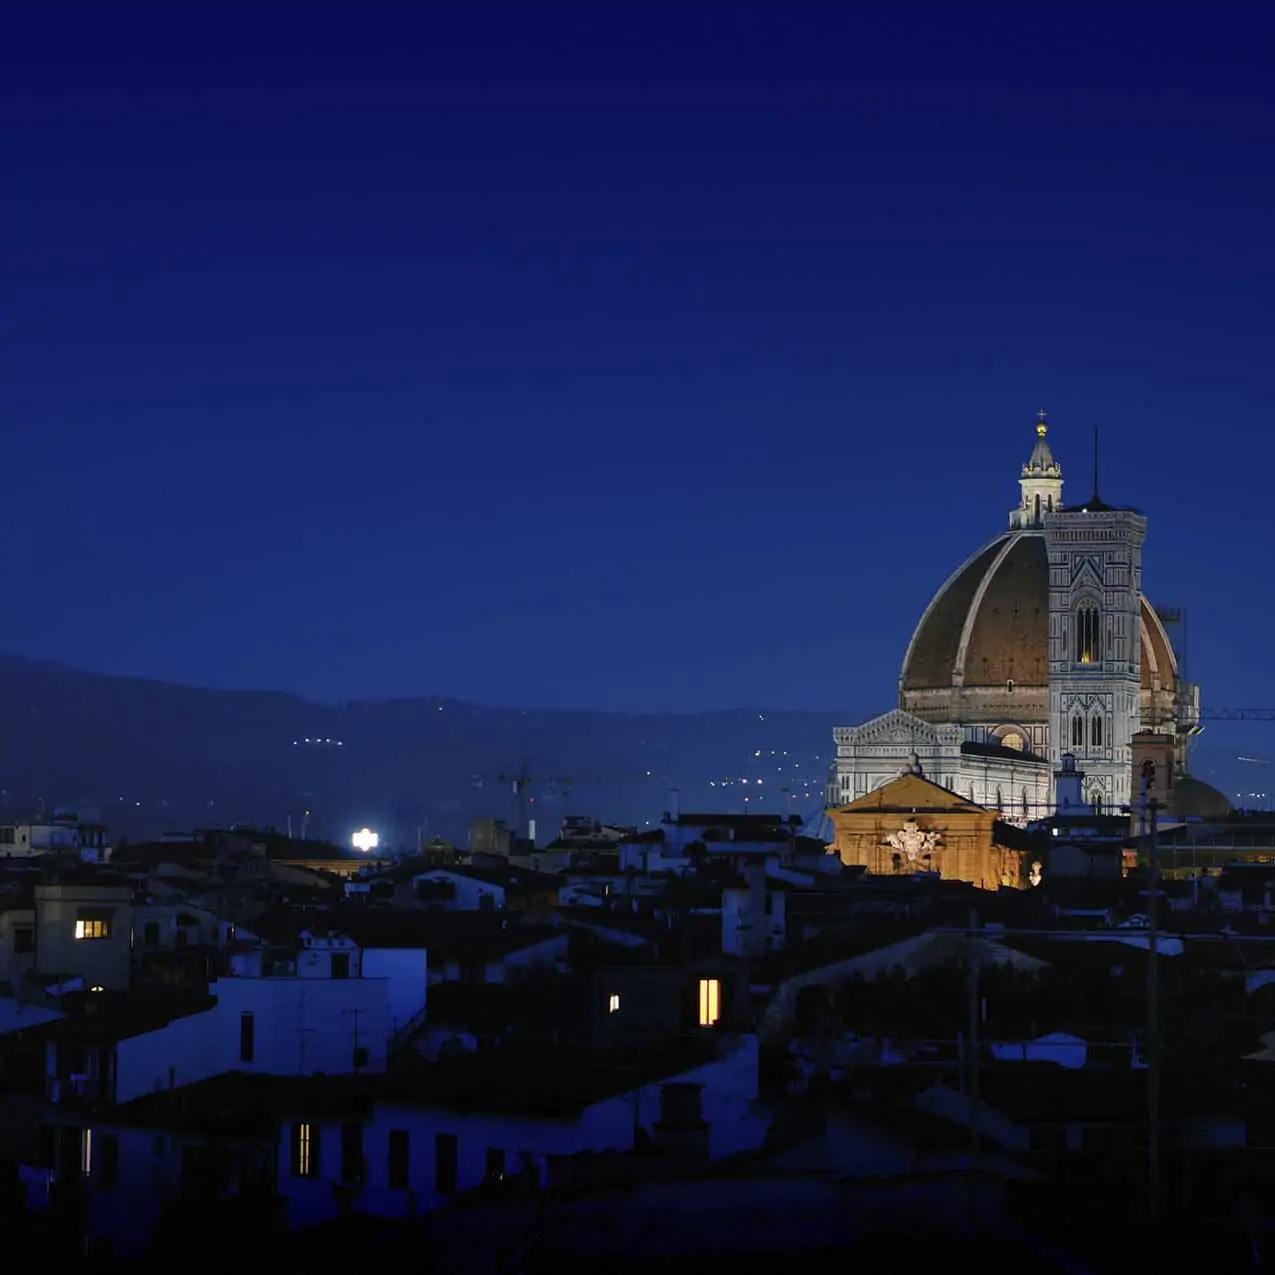 Duomo Illuminated in the Early Evening Skyline of Florence, Italy - Travel Photographer of Italy Photoshoots, Italy Photography